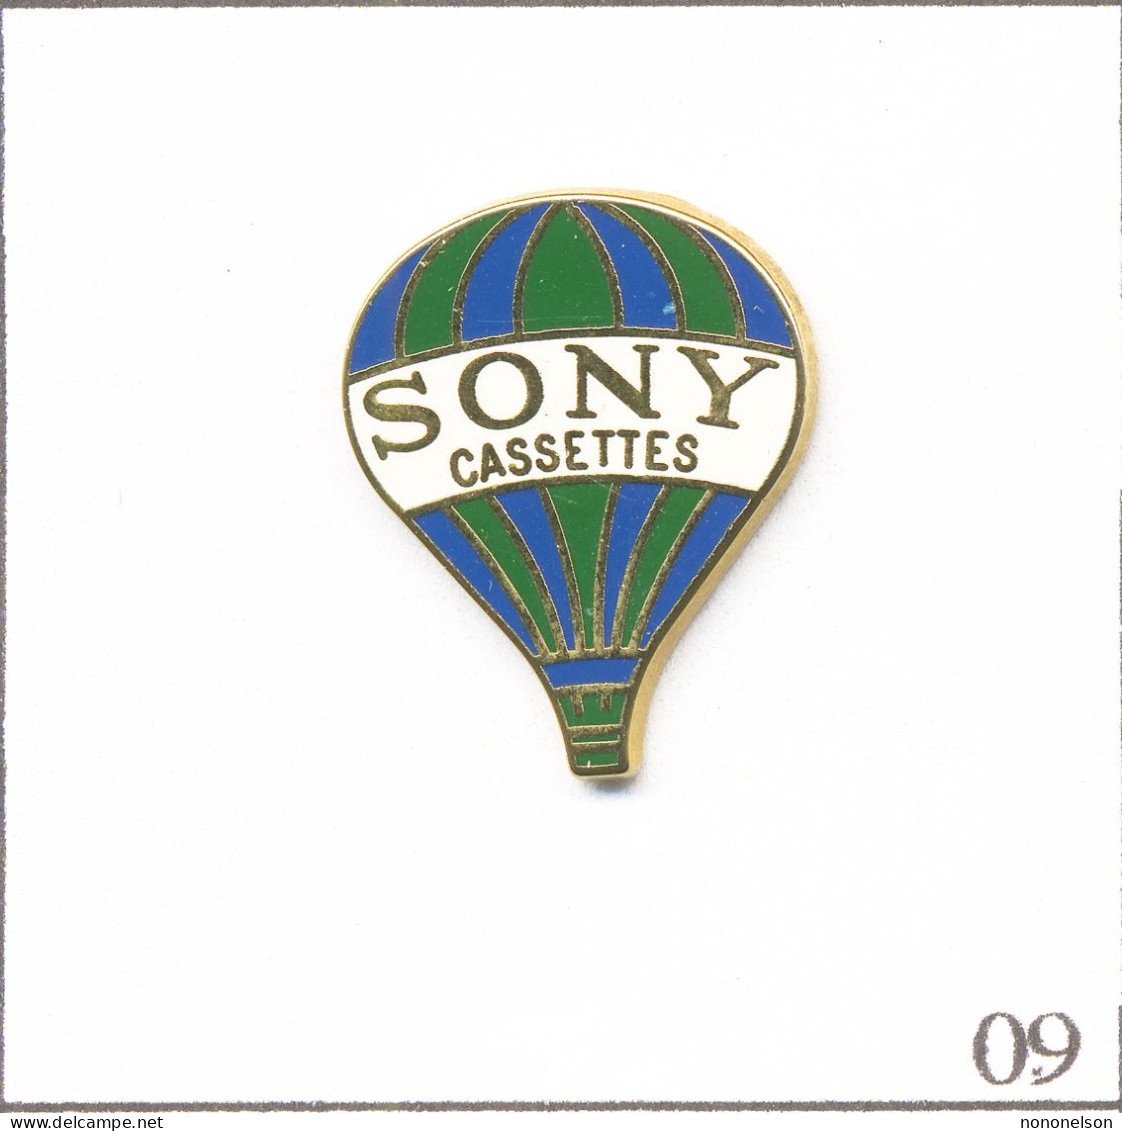 Pin's Transport - Montgolfière / Ballon “Sony“ - Rayures Vertes Et Bleues. Est. Sony 1989. Zamac. T953-09 - Fesselballons